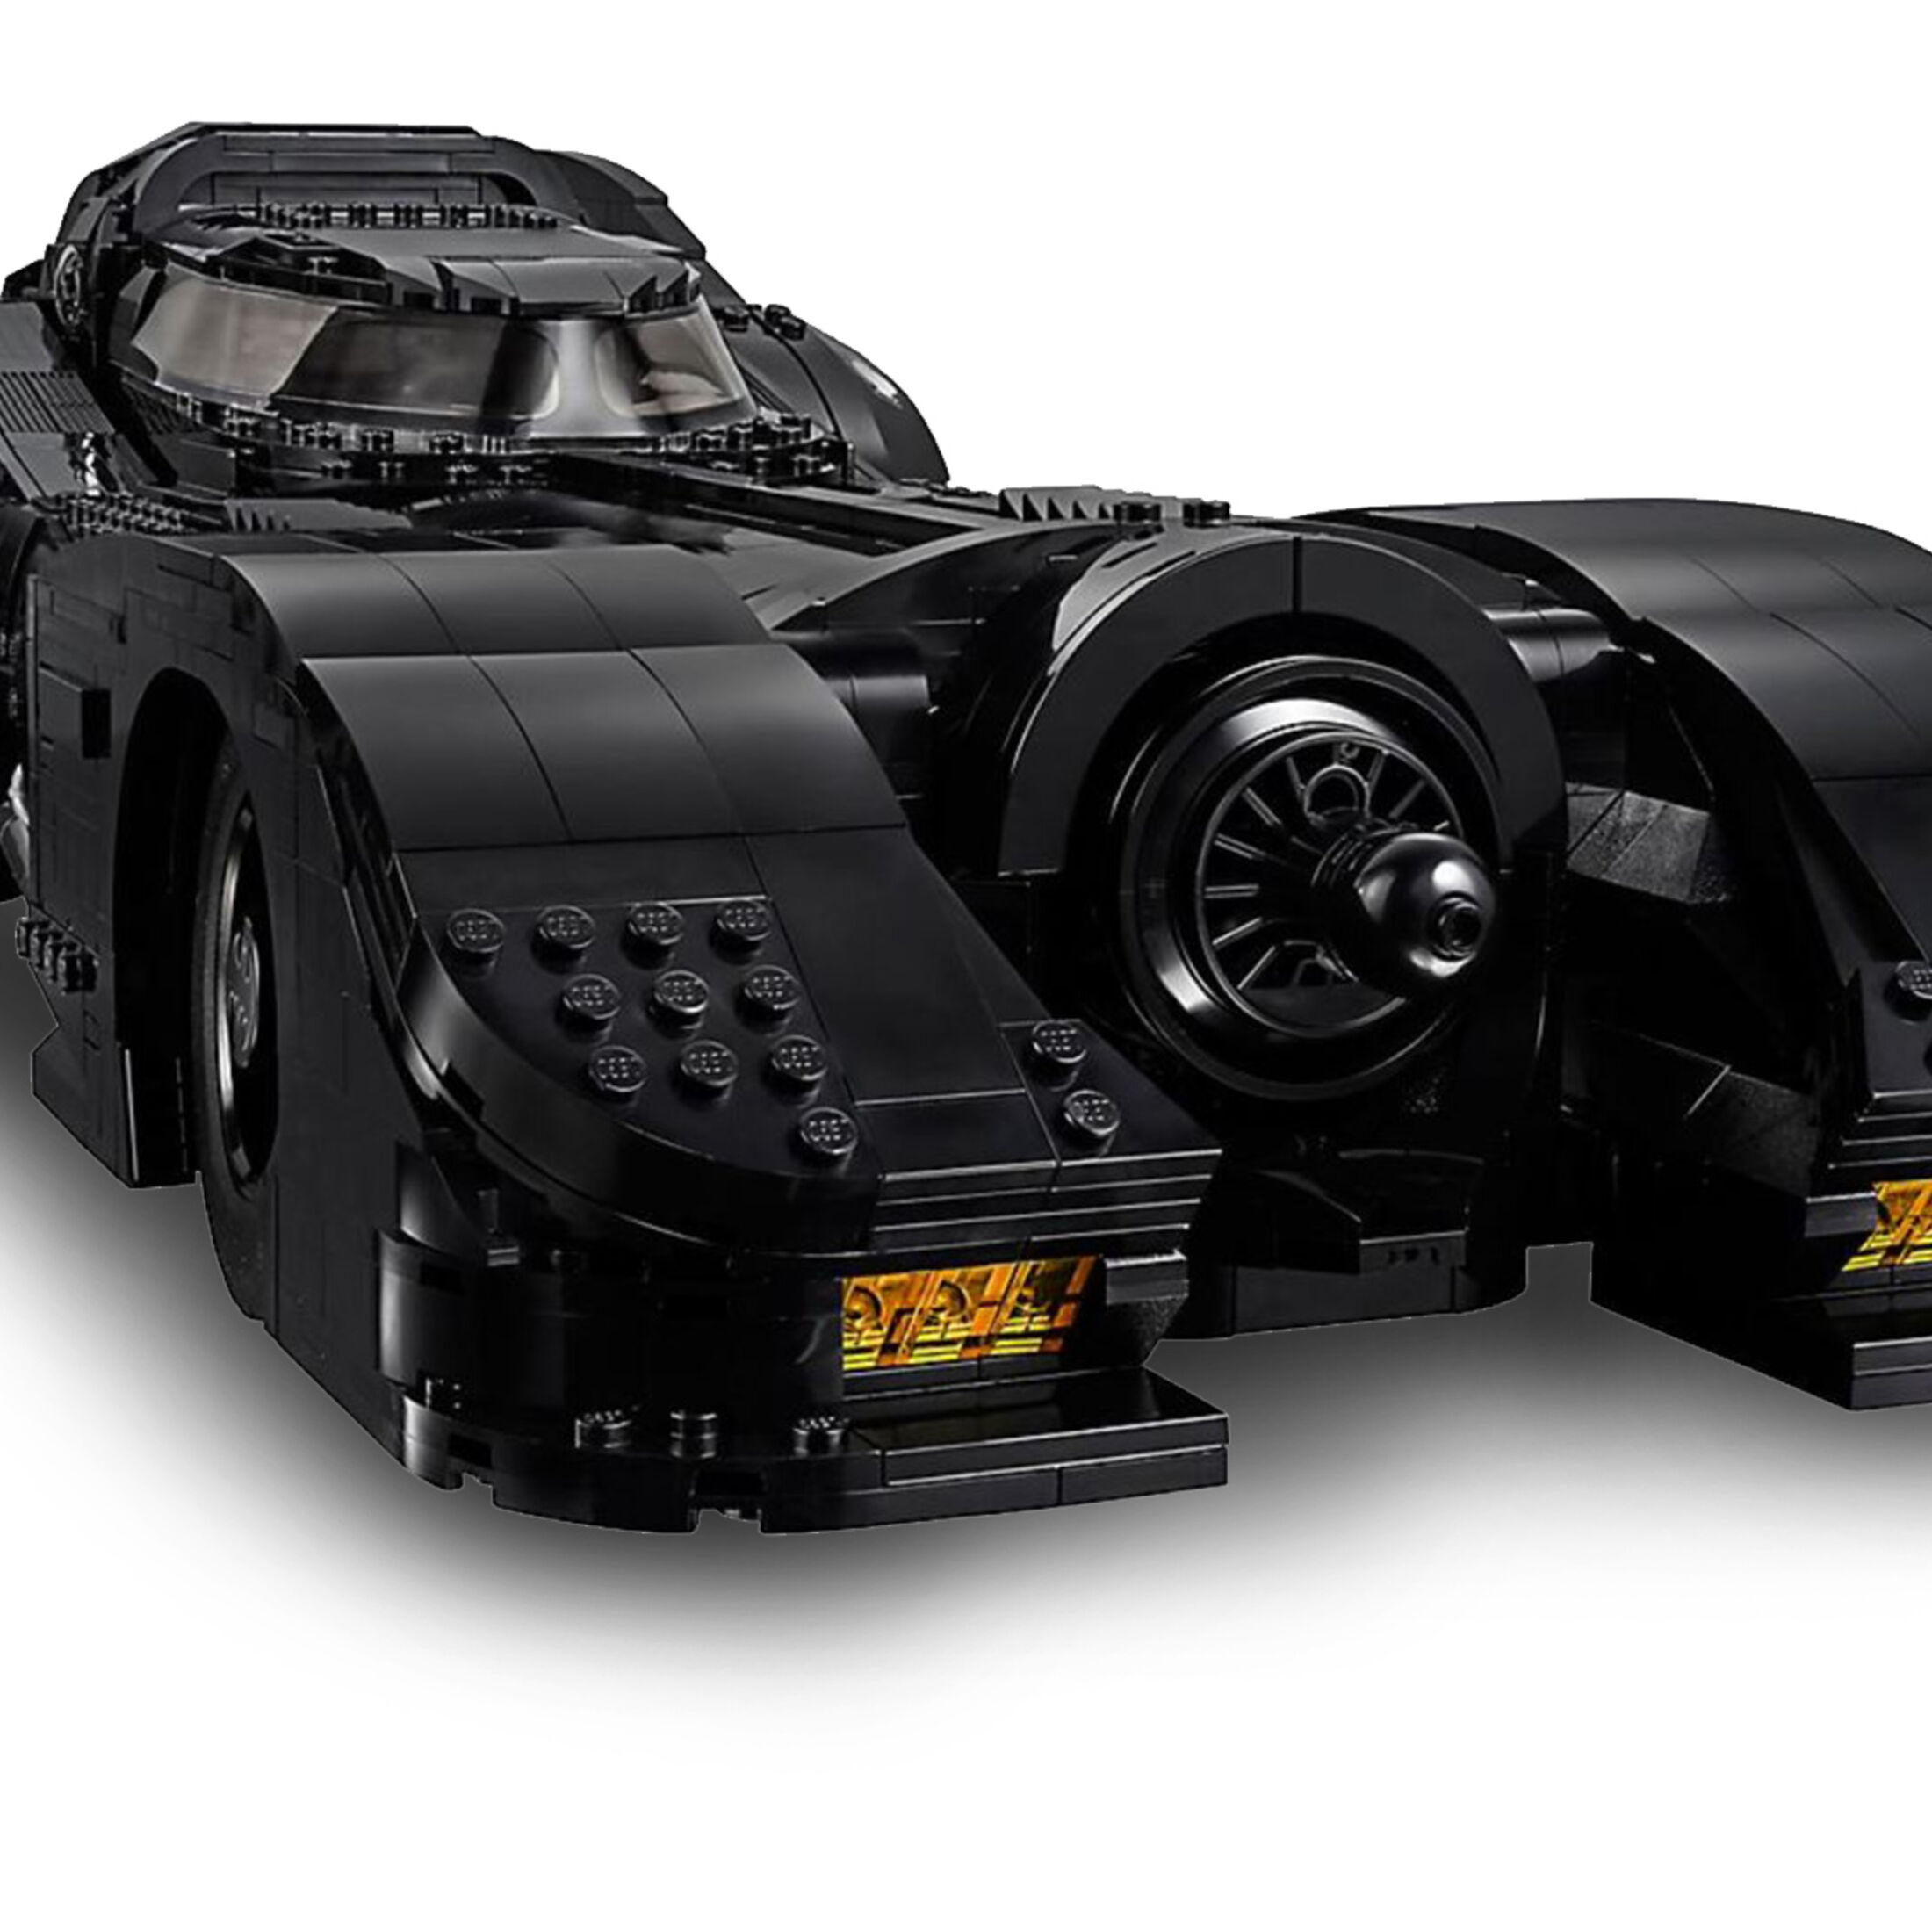 https://imgr1.auto-motor-und-sport.de/Lego-Batmobil-2019-jsonLd1x1-7ff4fa98-1645020.jpg